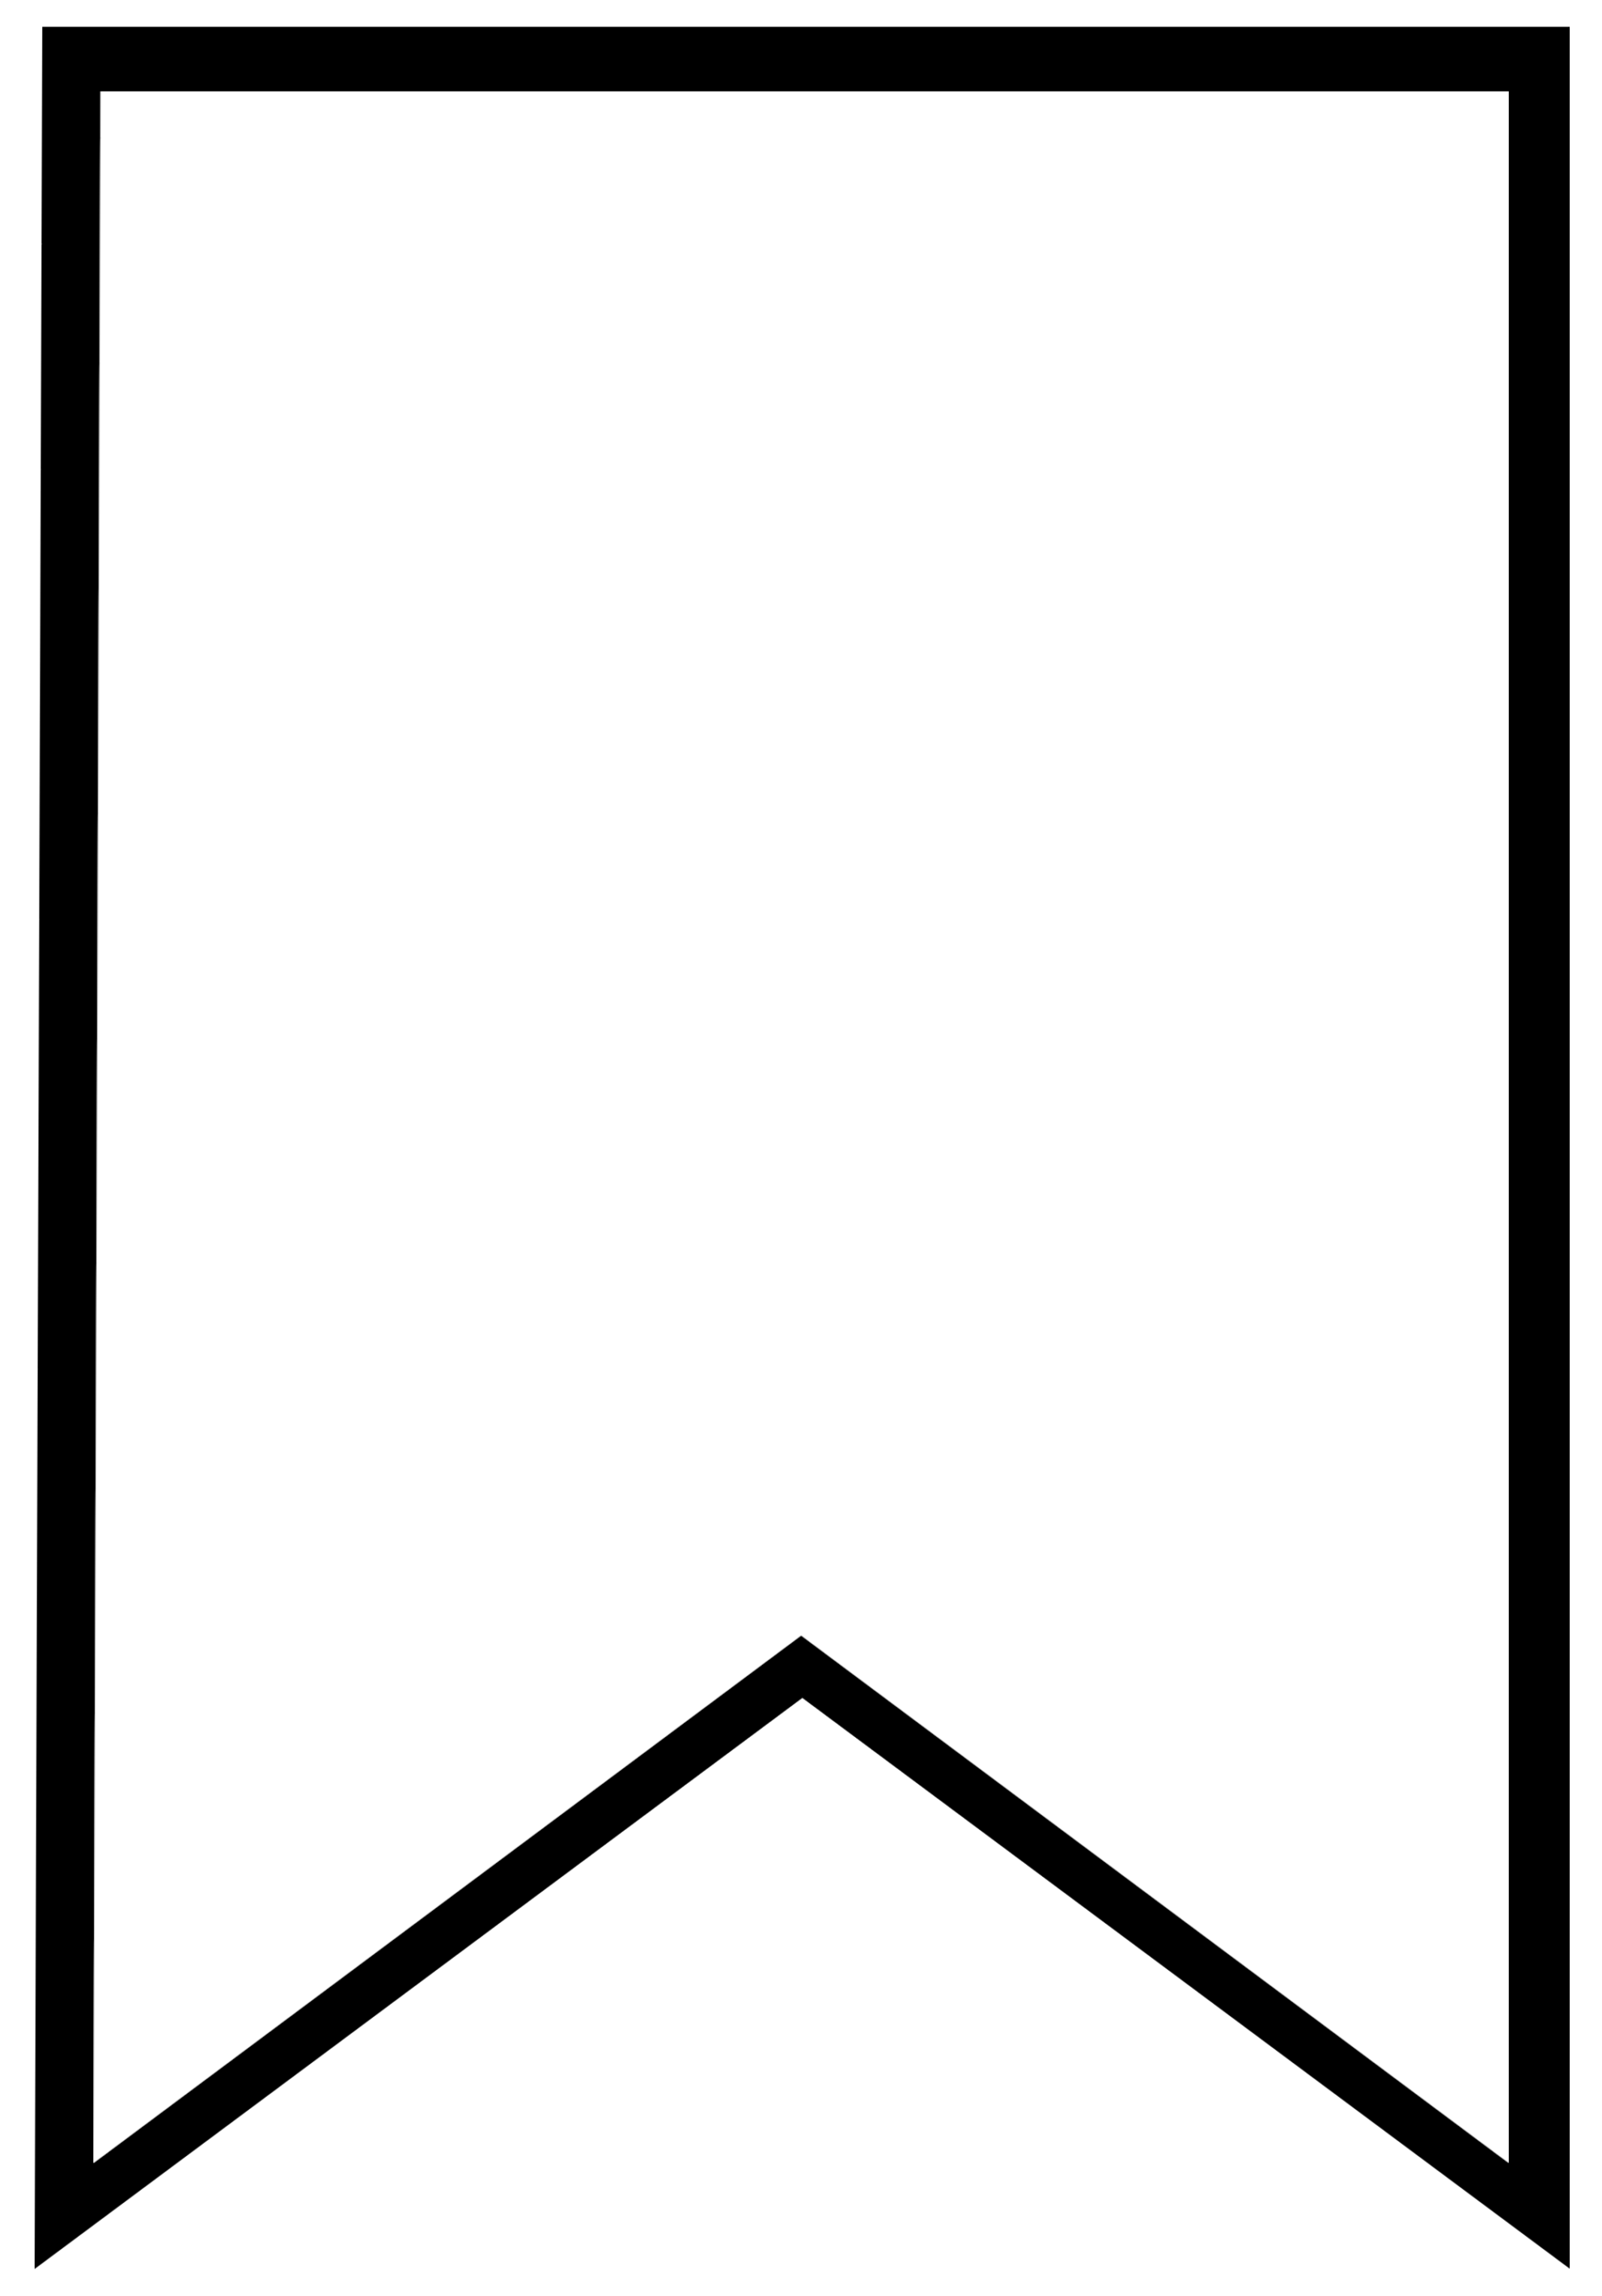 white banner